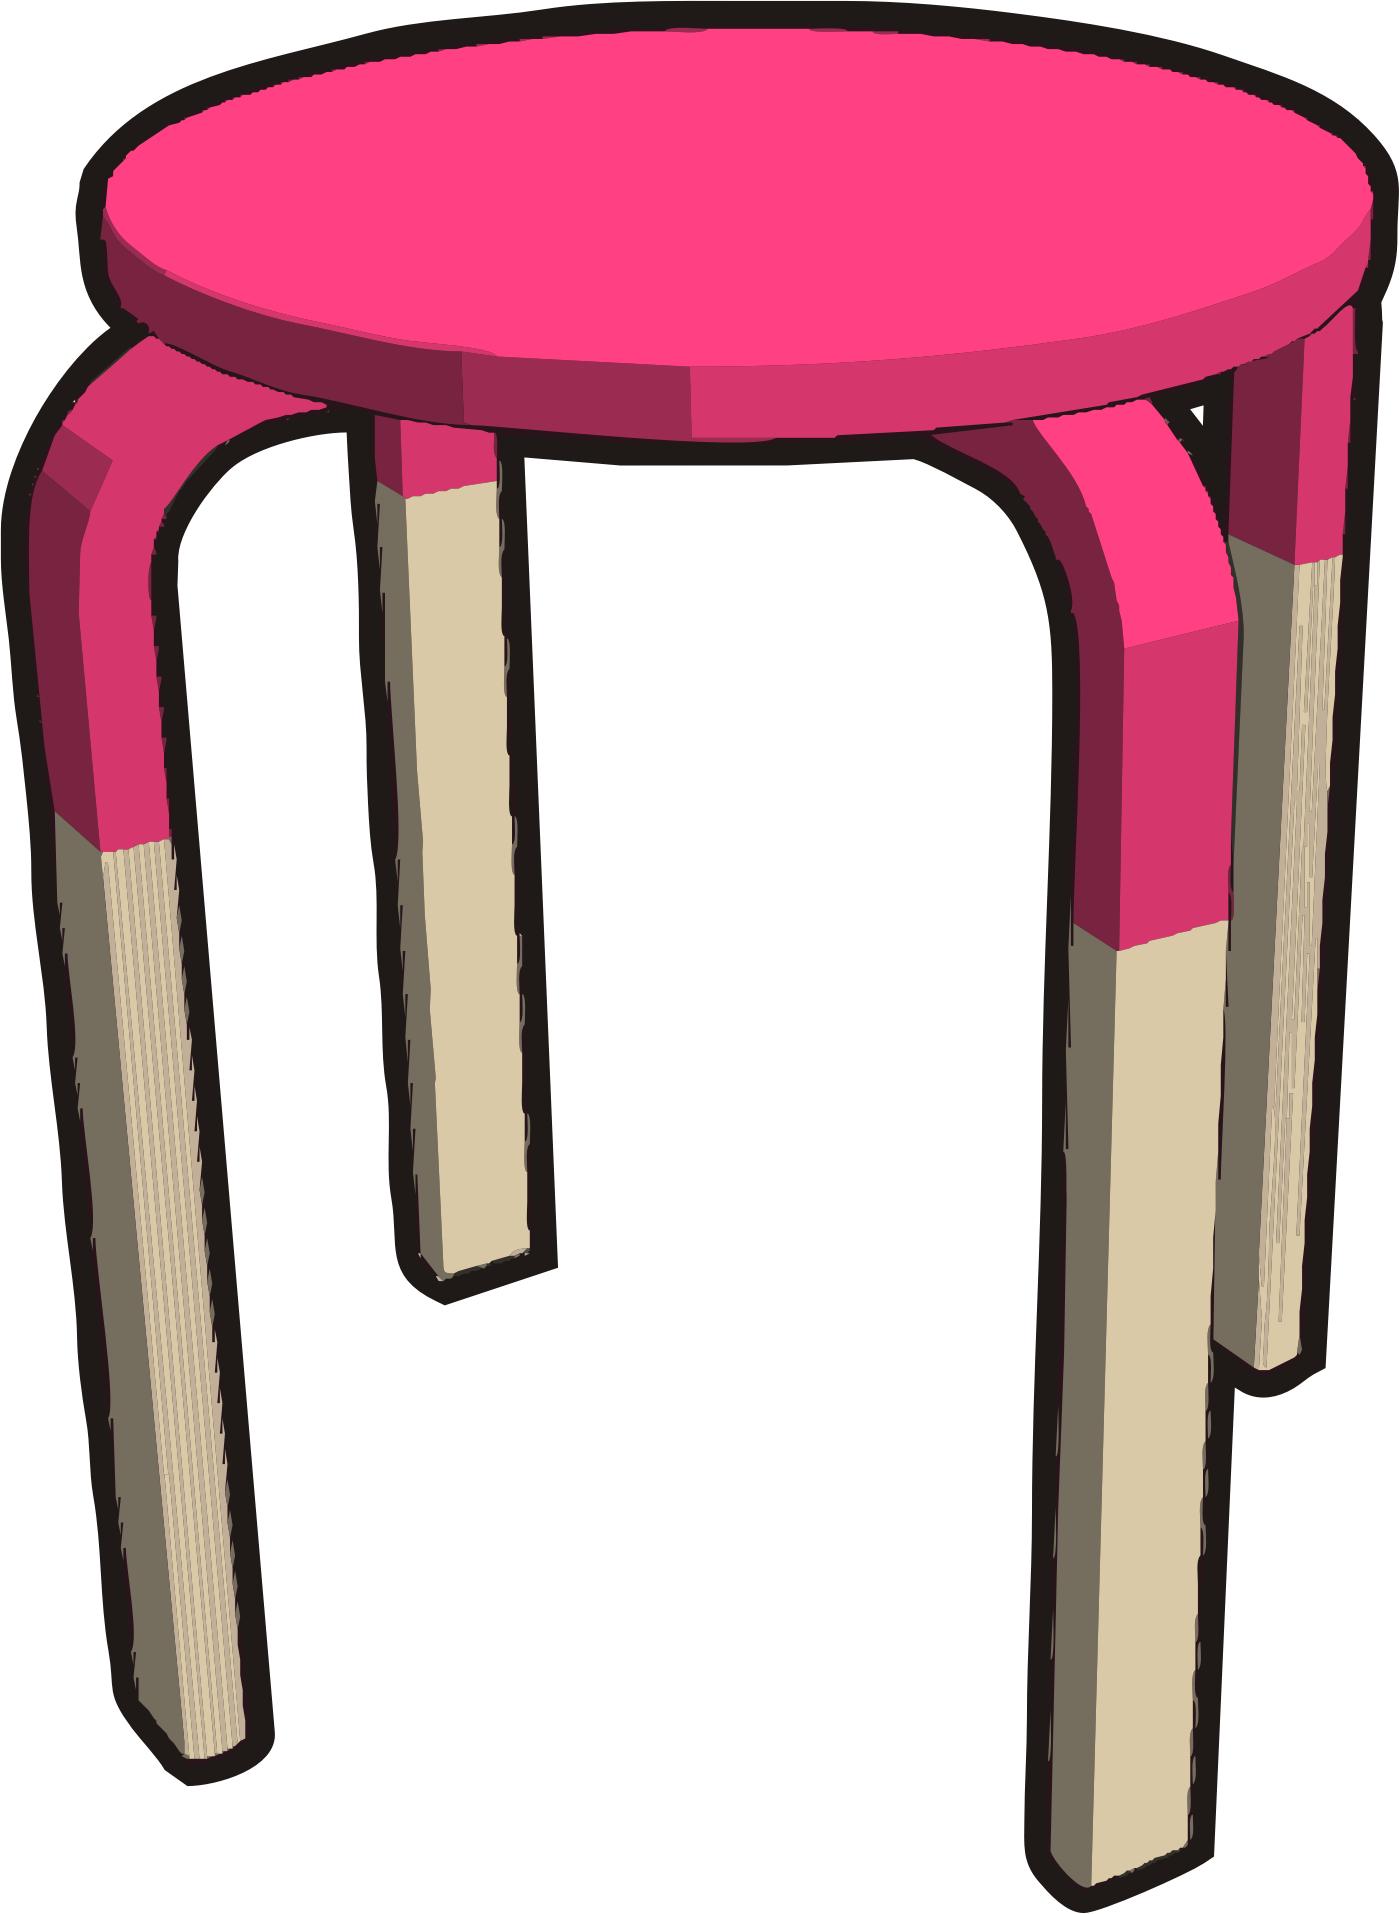 Ikea stuff - Frosta stool, half magenta png